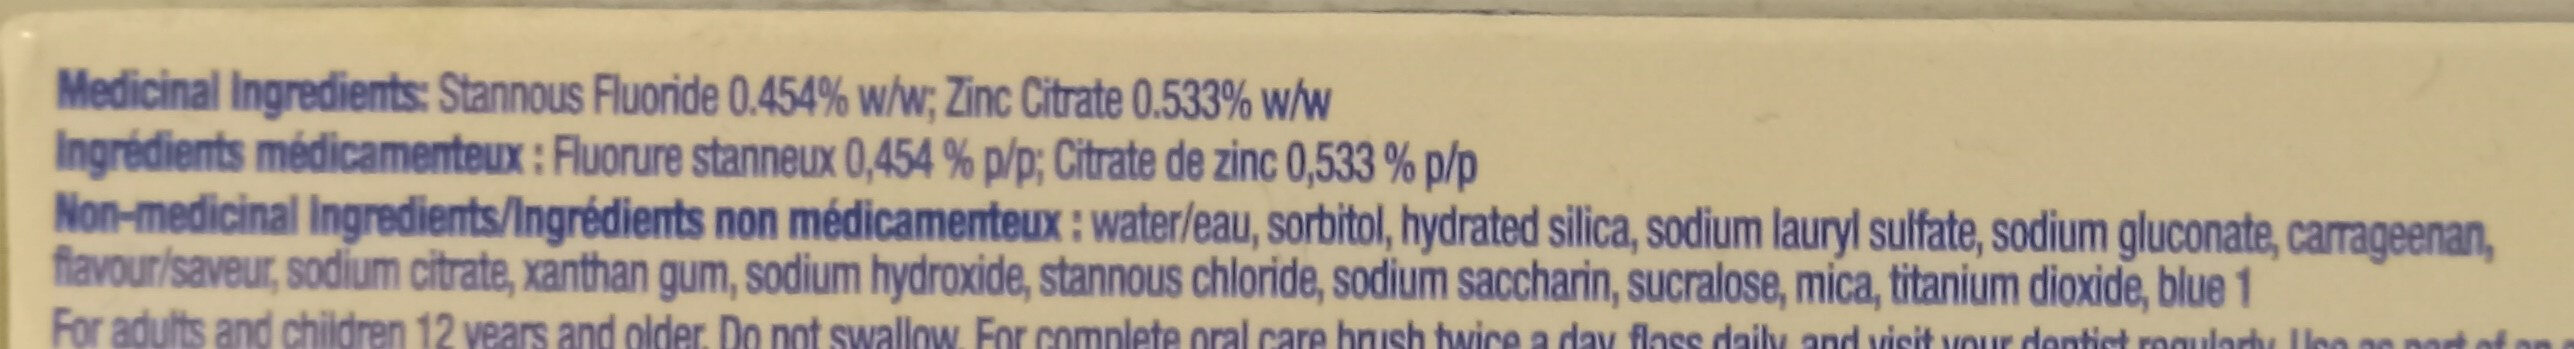 Whitening Gel Flouride Toothpaste - Inhaltsstoffe - en